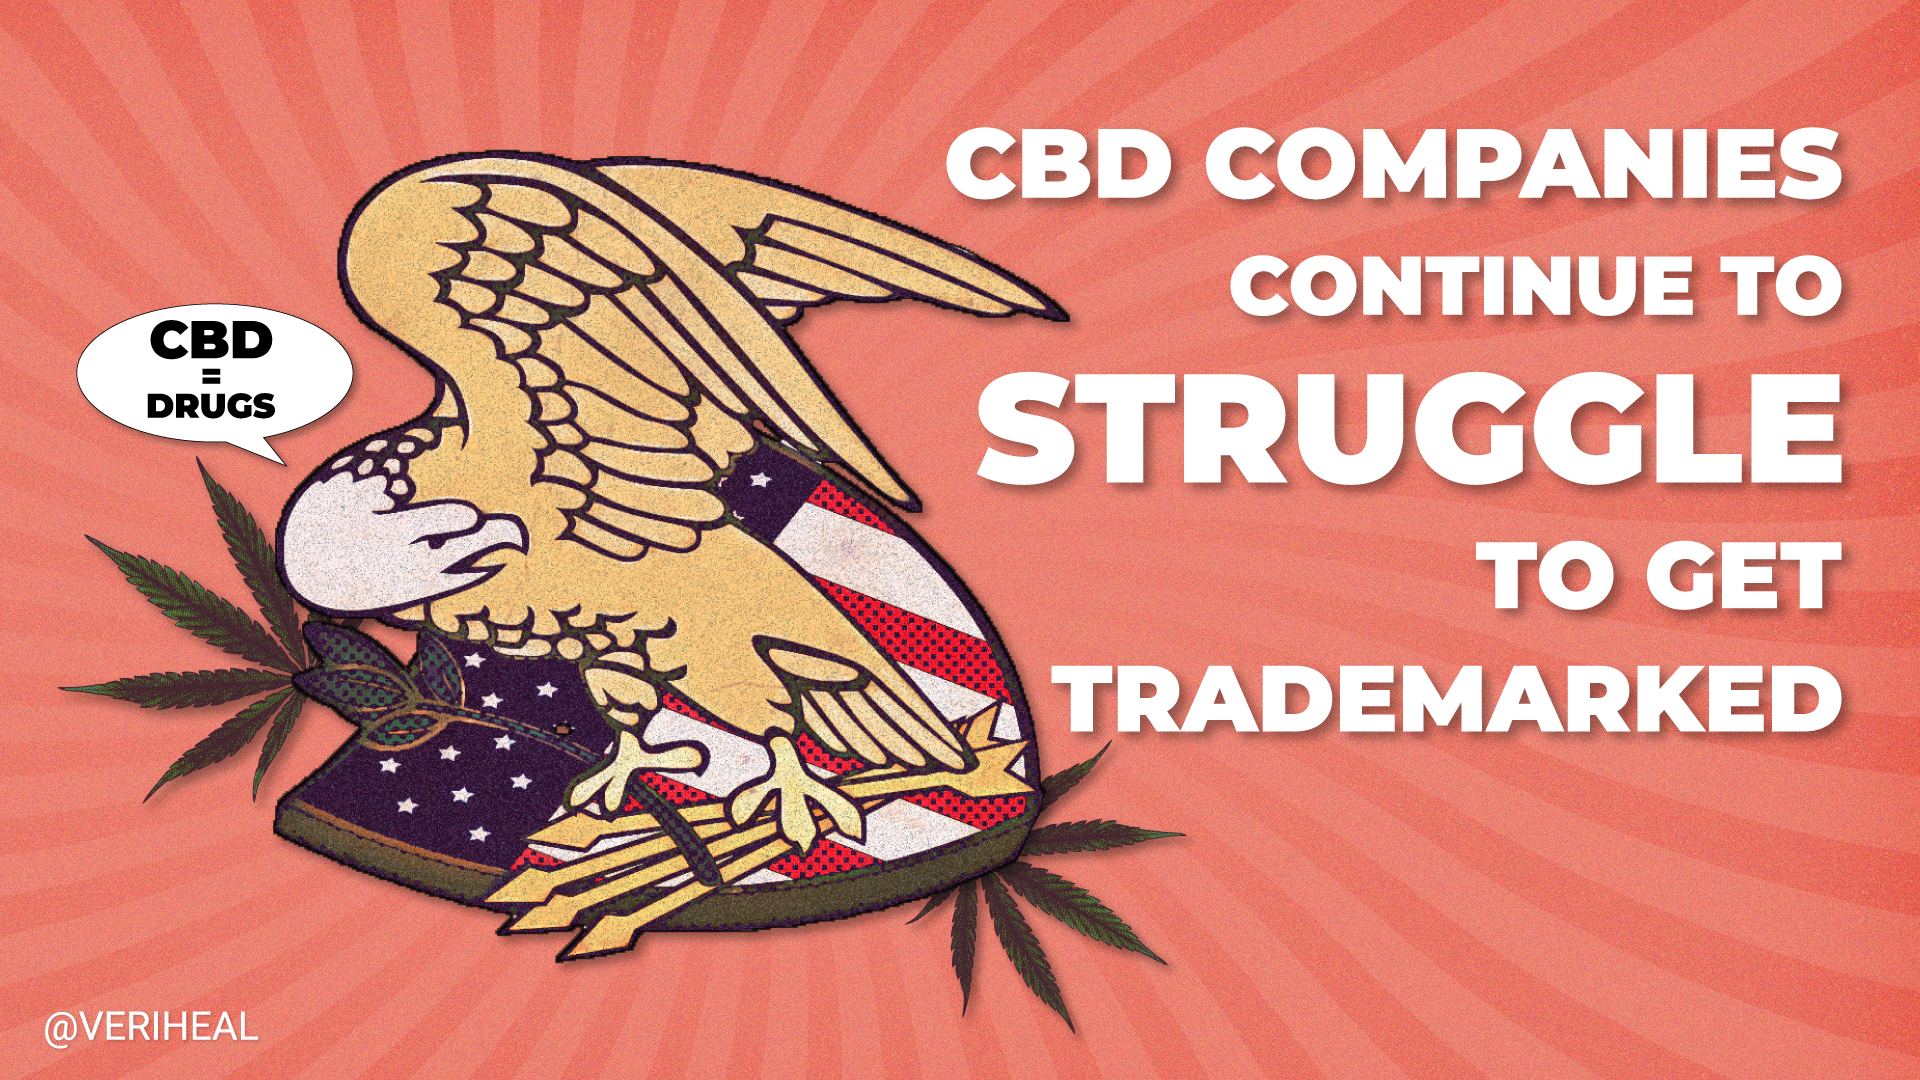 CBD Company’s Trademark Denied, U.S. Veterans Want Cannabis, & CO Police Warn of Tainted Cannabis